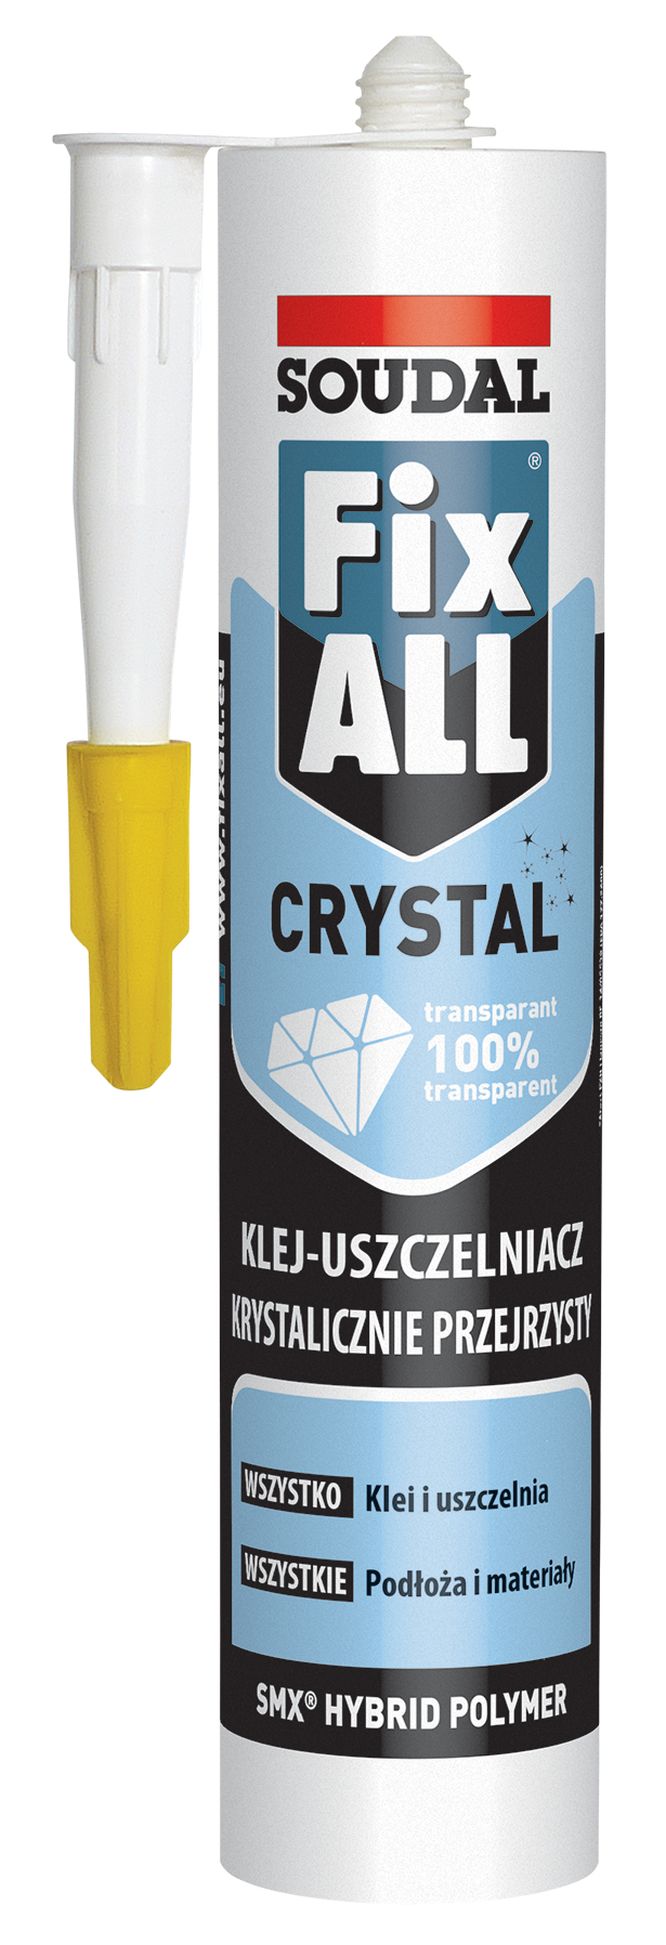 20201219soudal FixAll Crystal